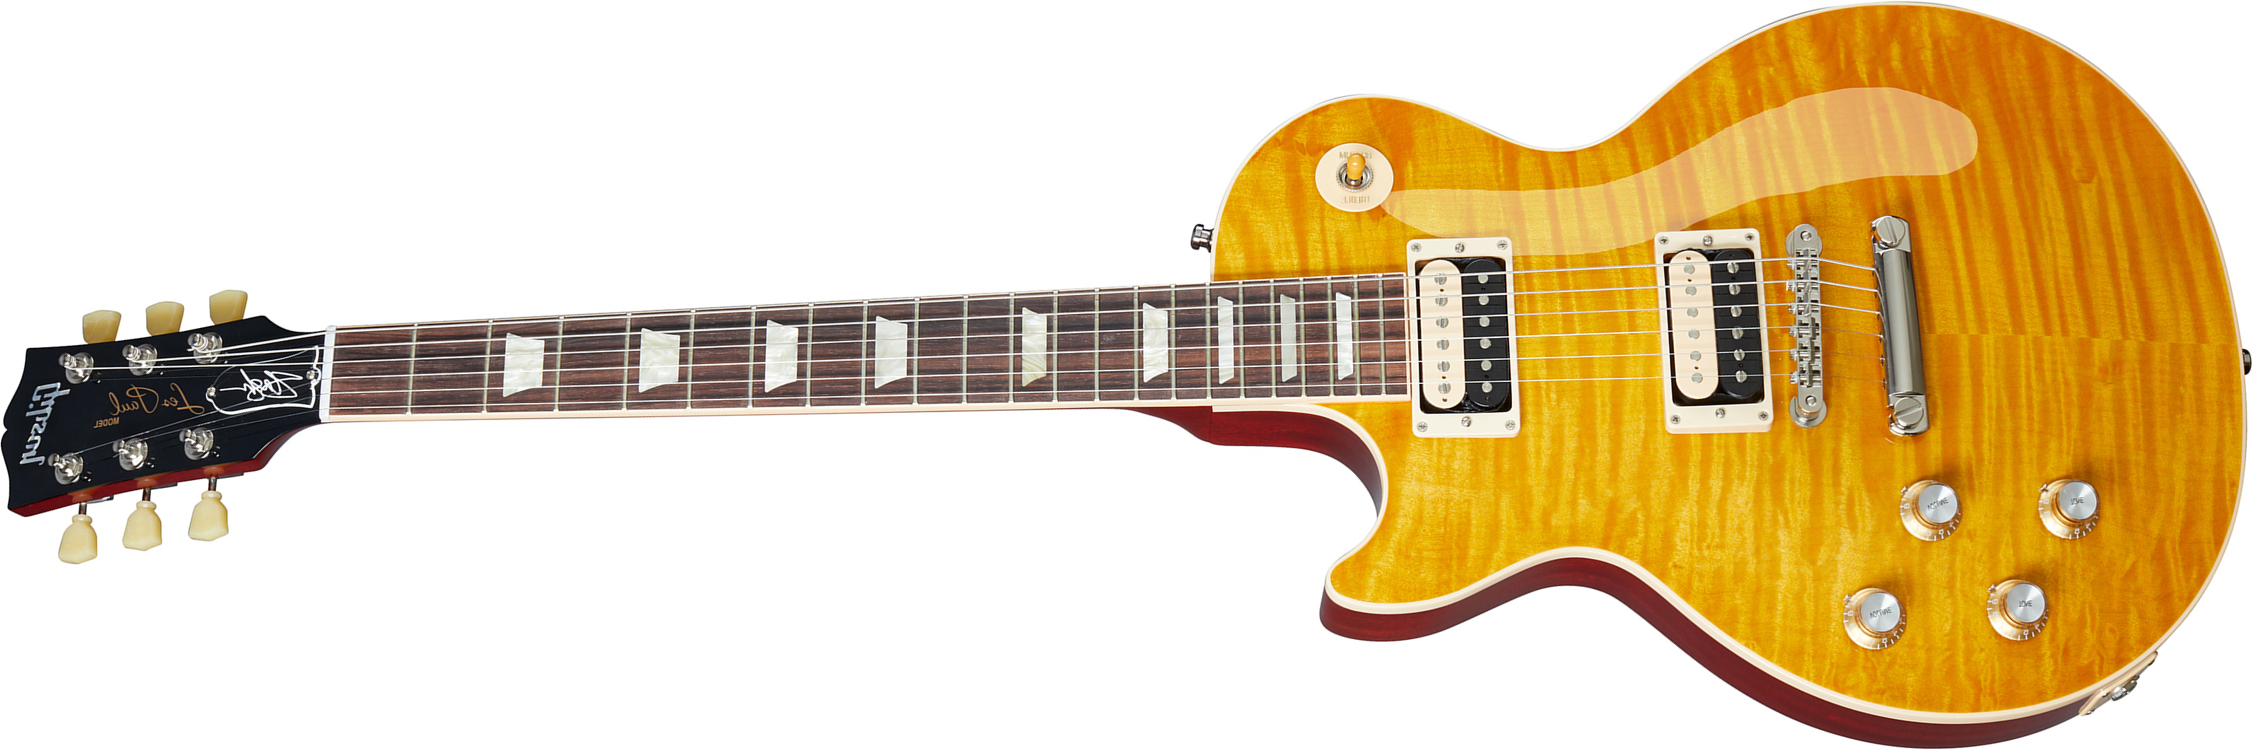 Gibson Slash Les Paul Standard 50's Lh Original 2020 Signature Gaucher 2h Ht Rw - Appetite Amber - Left-handed electric guitar - Main picture